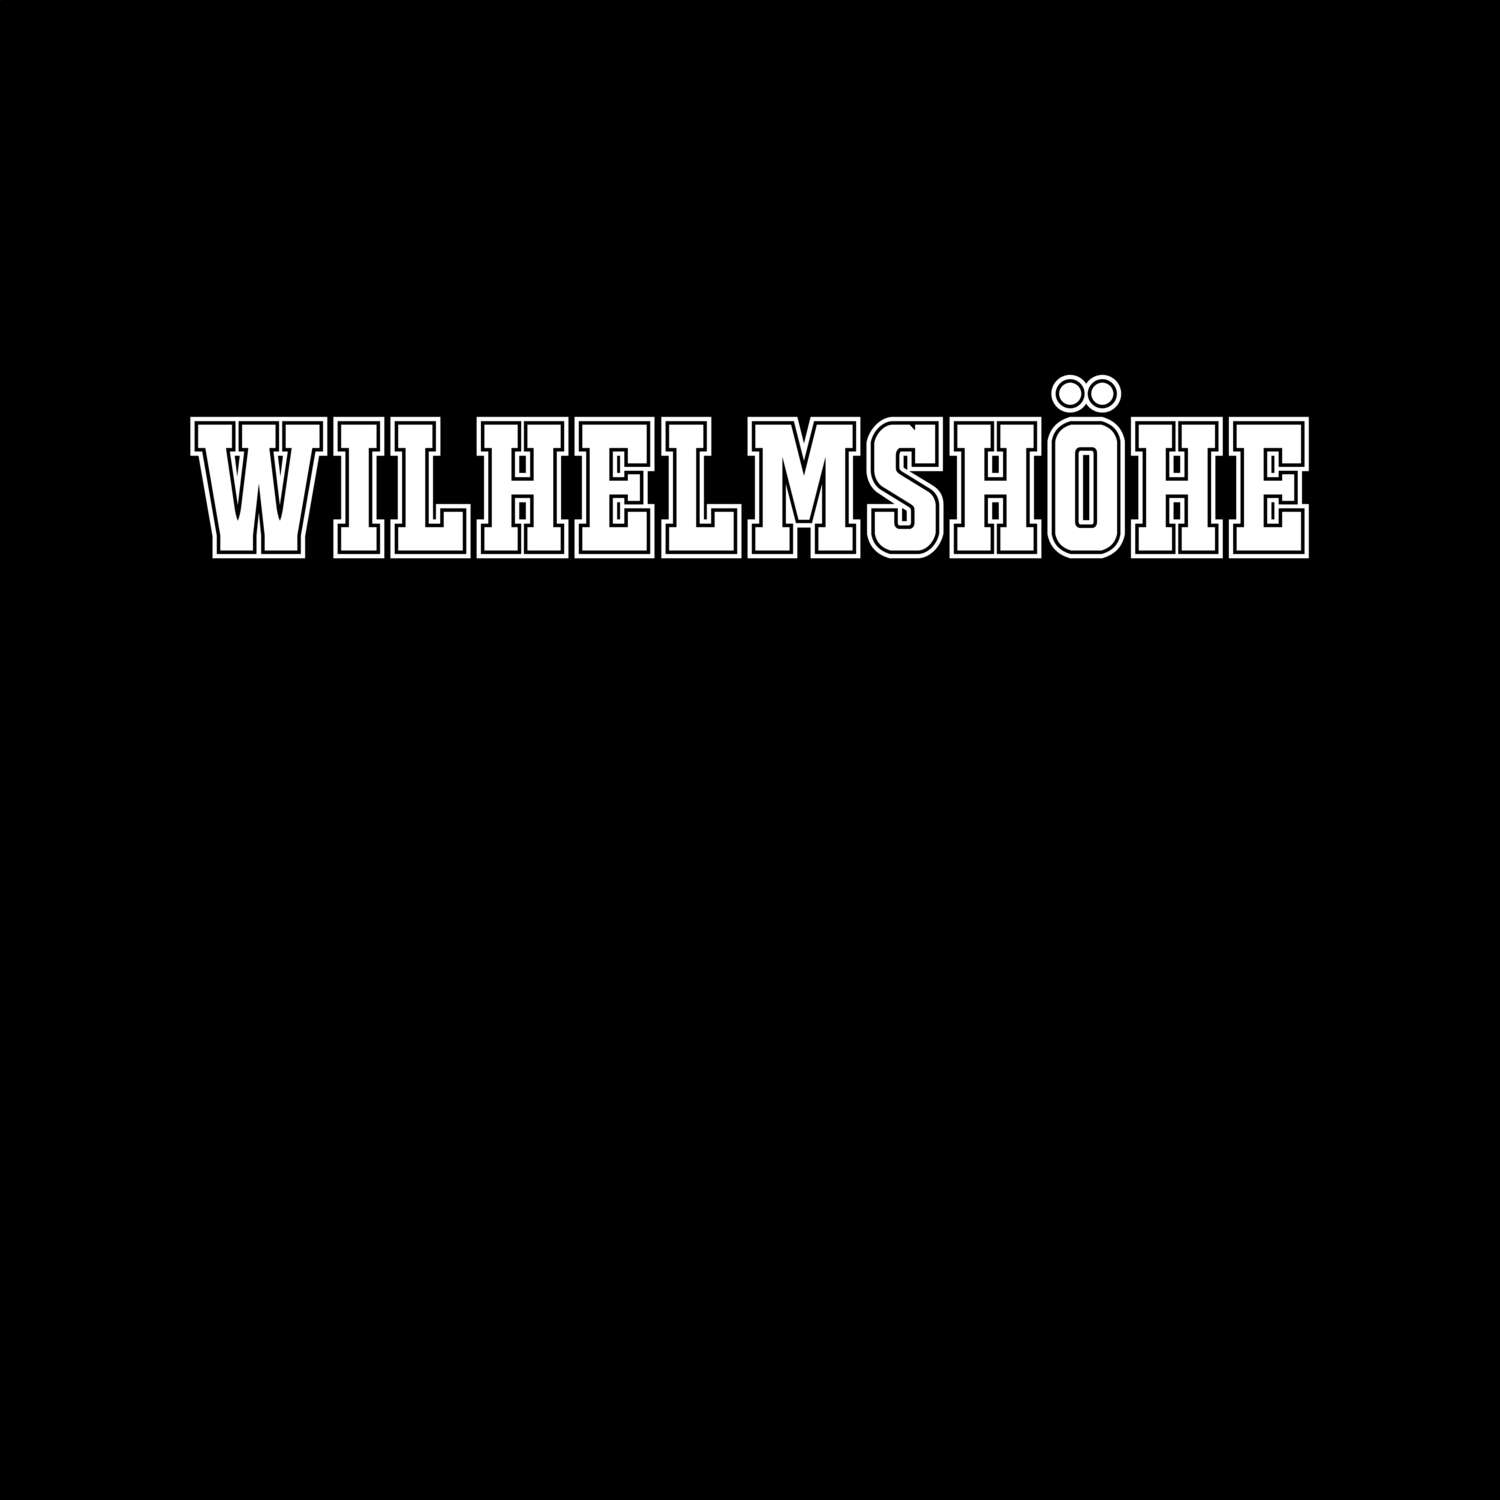 Wilhelmshöhe T-Shirt »Classic«